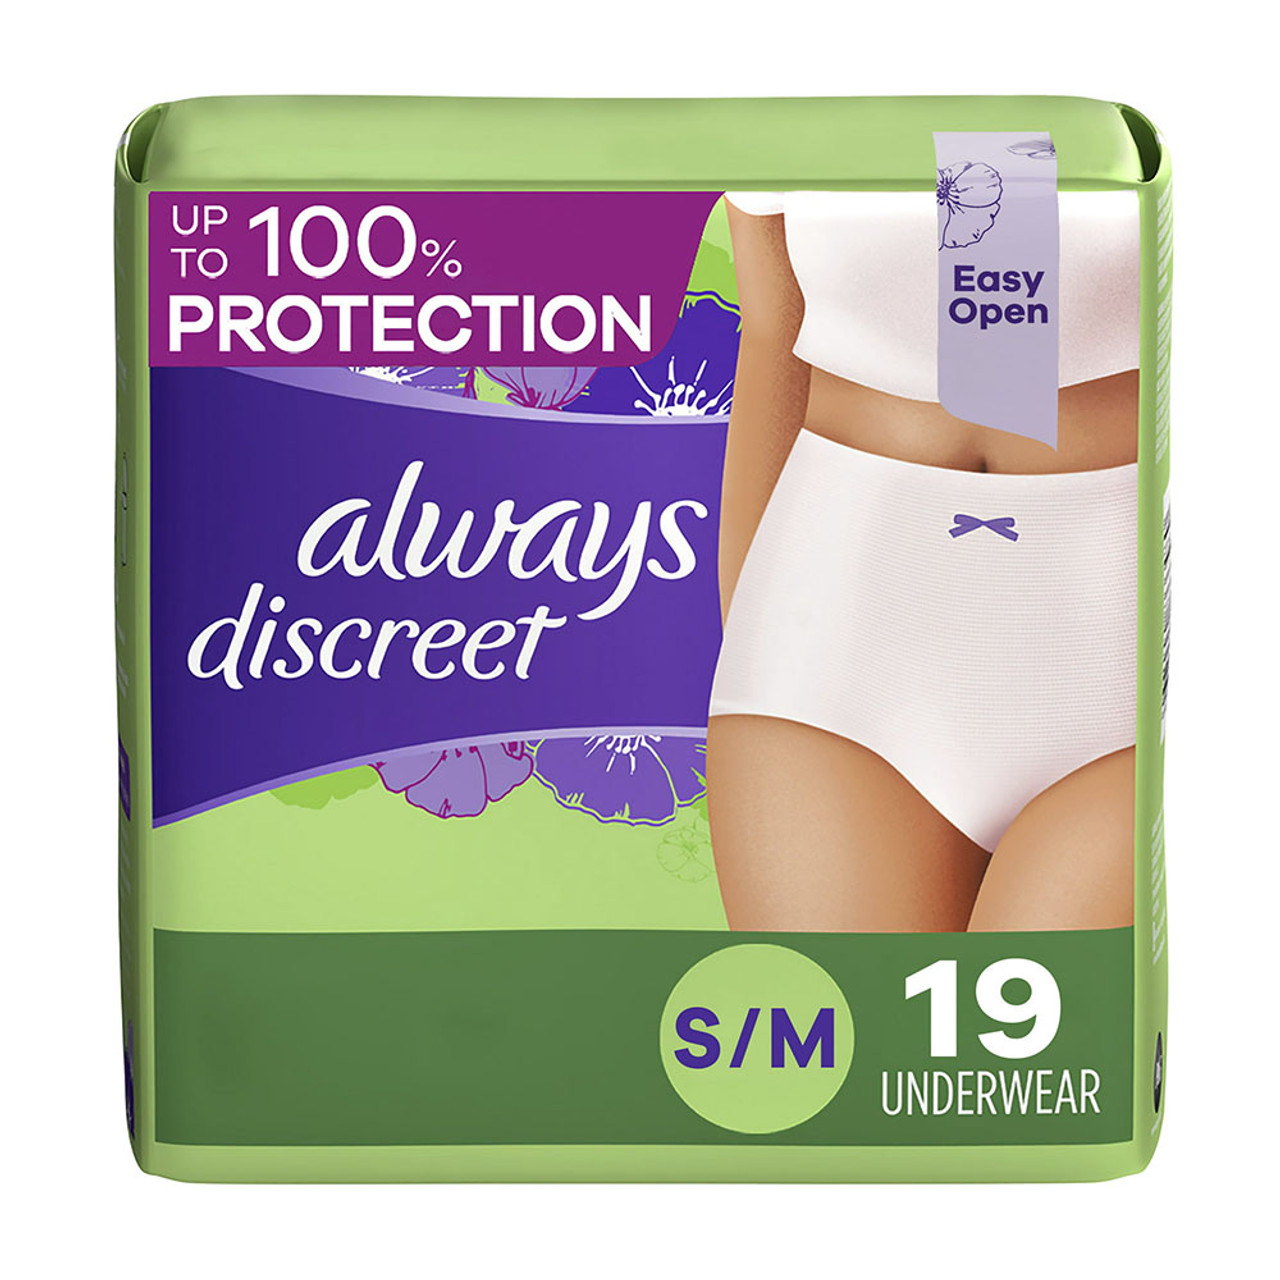 Depend Underwear, Maximum, Small-Medium 19 ea, Incontinence